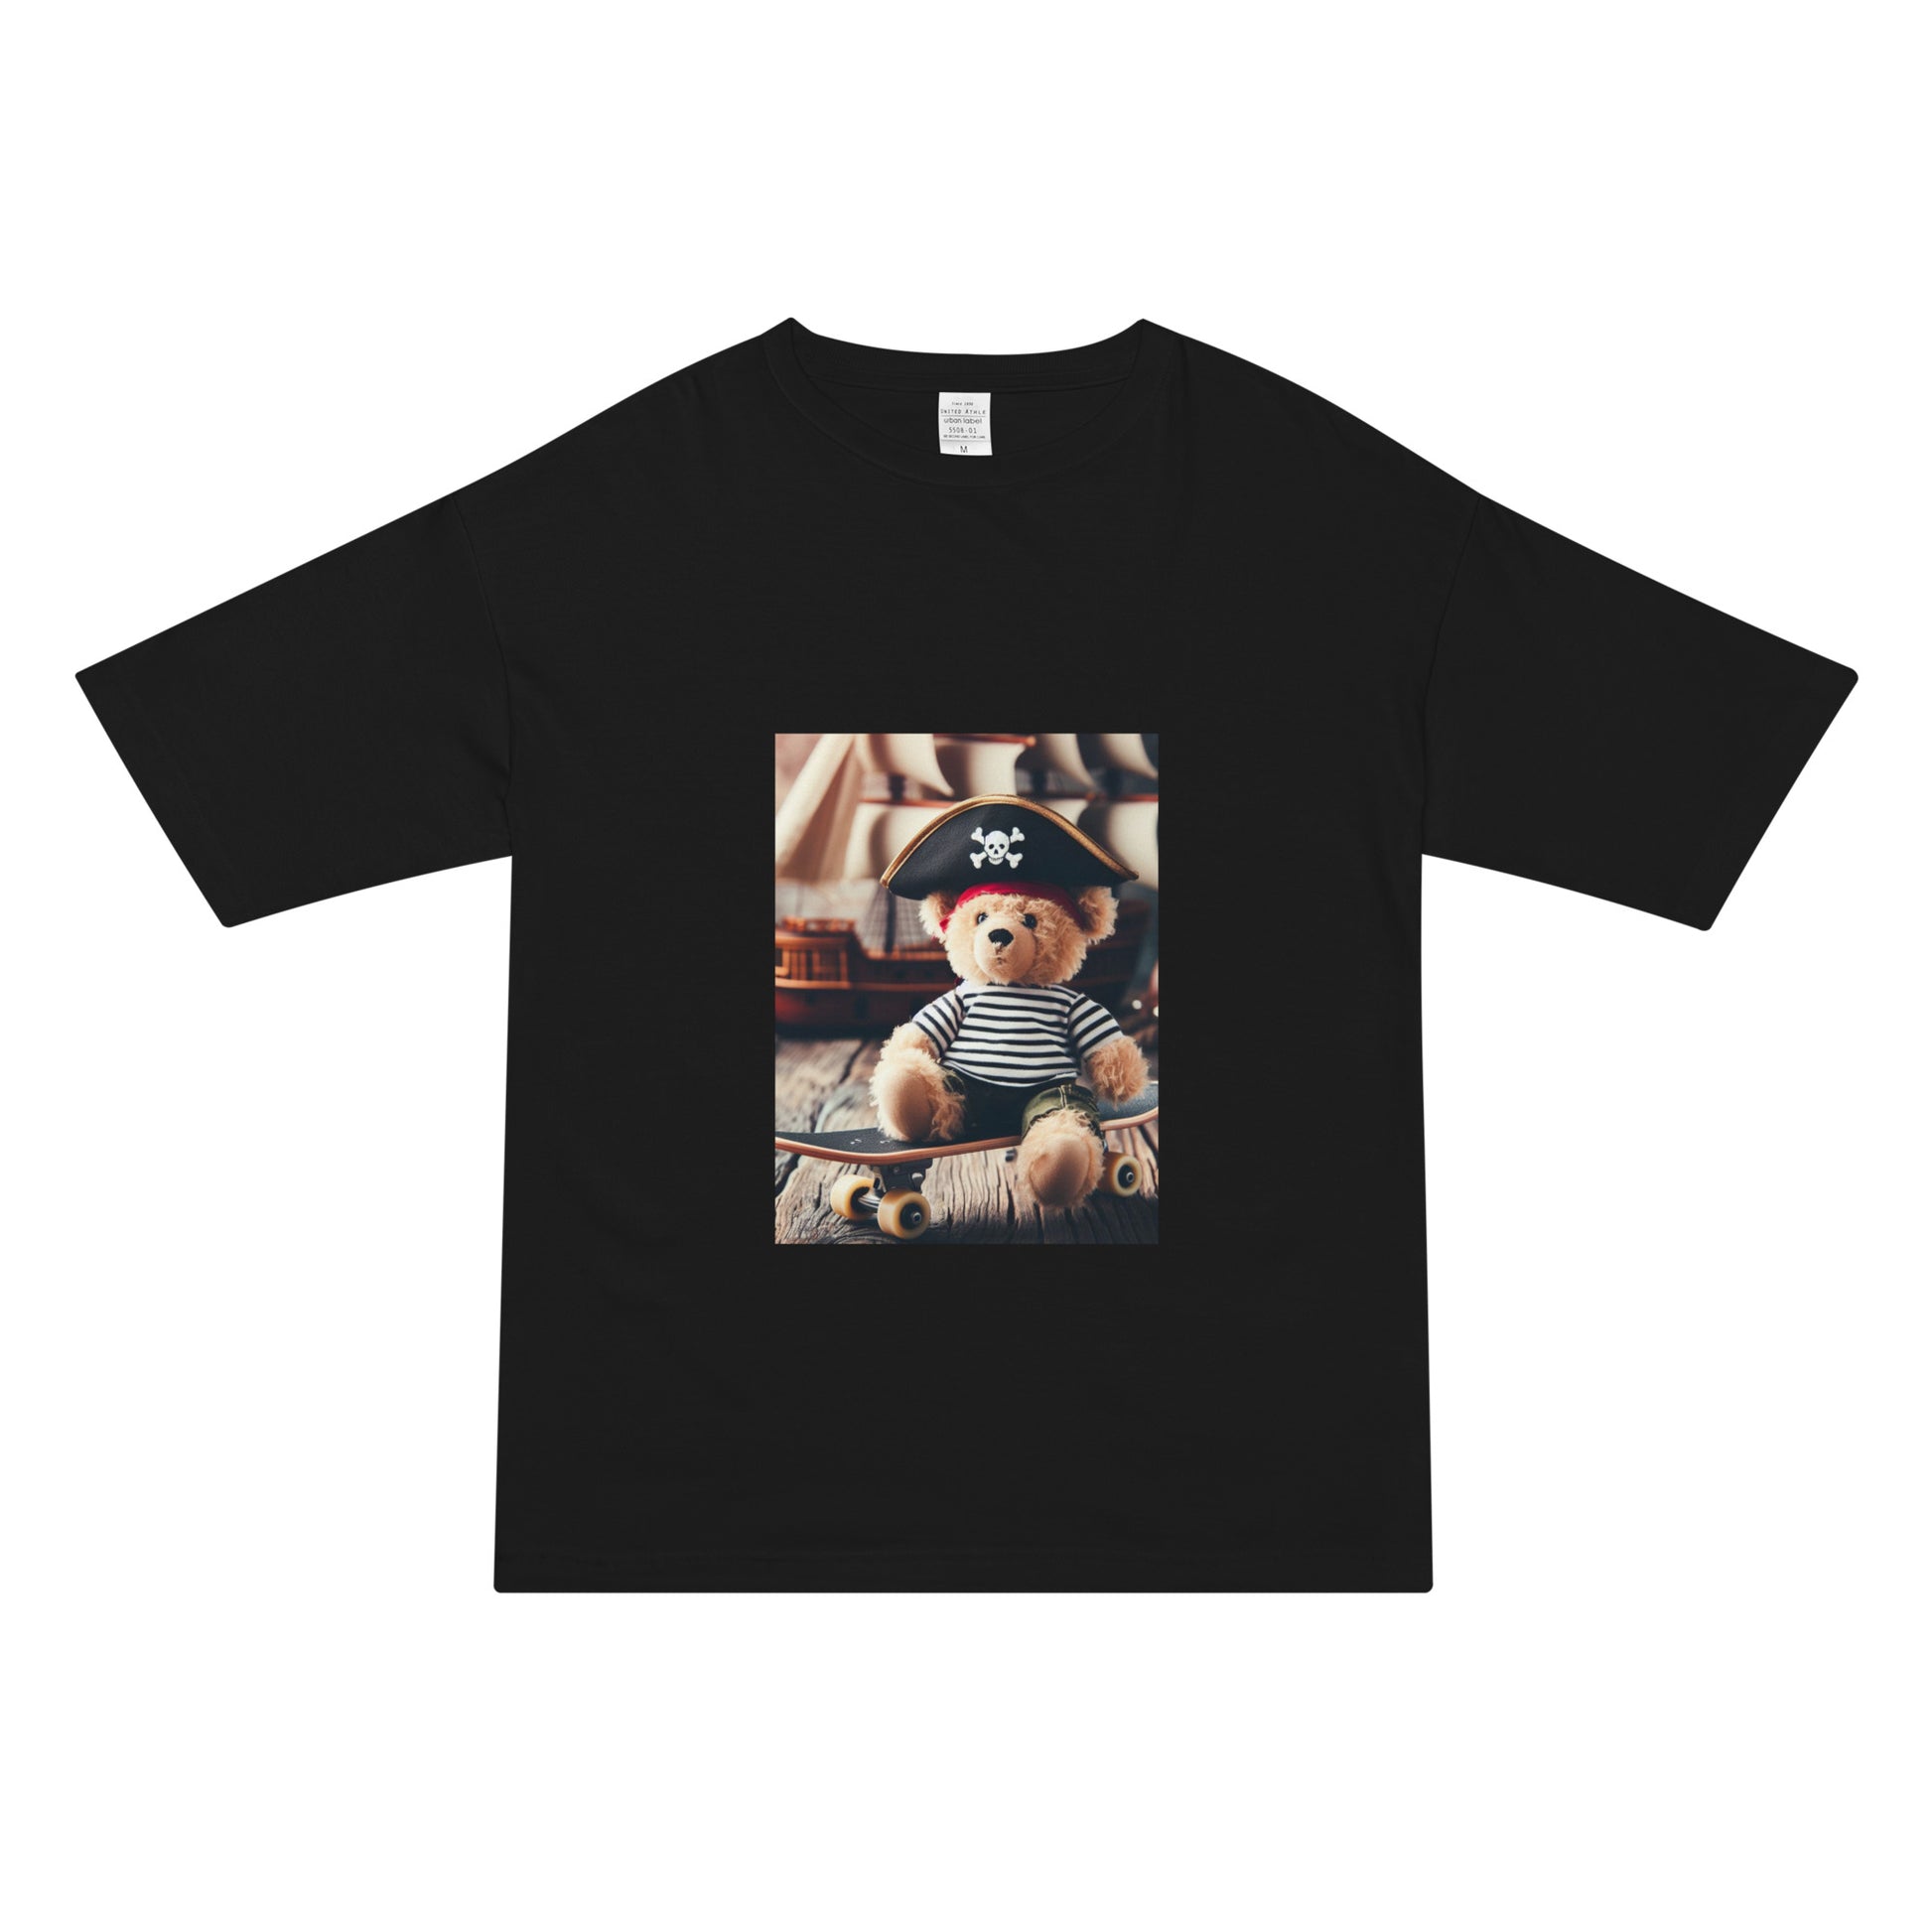 Pirate Cove Bear T-Shirt Black - ROSE Society